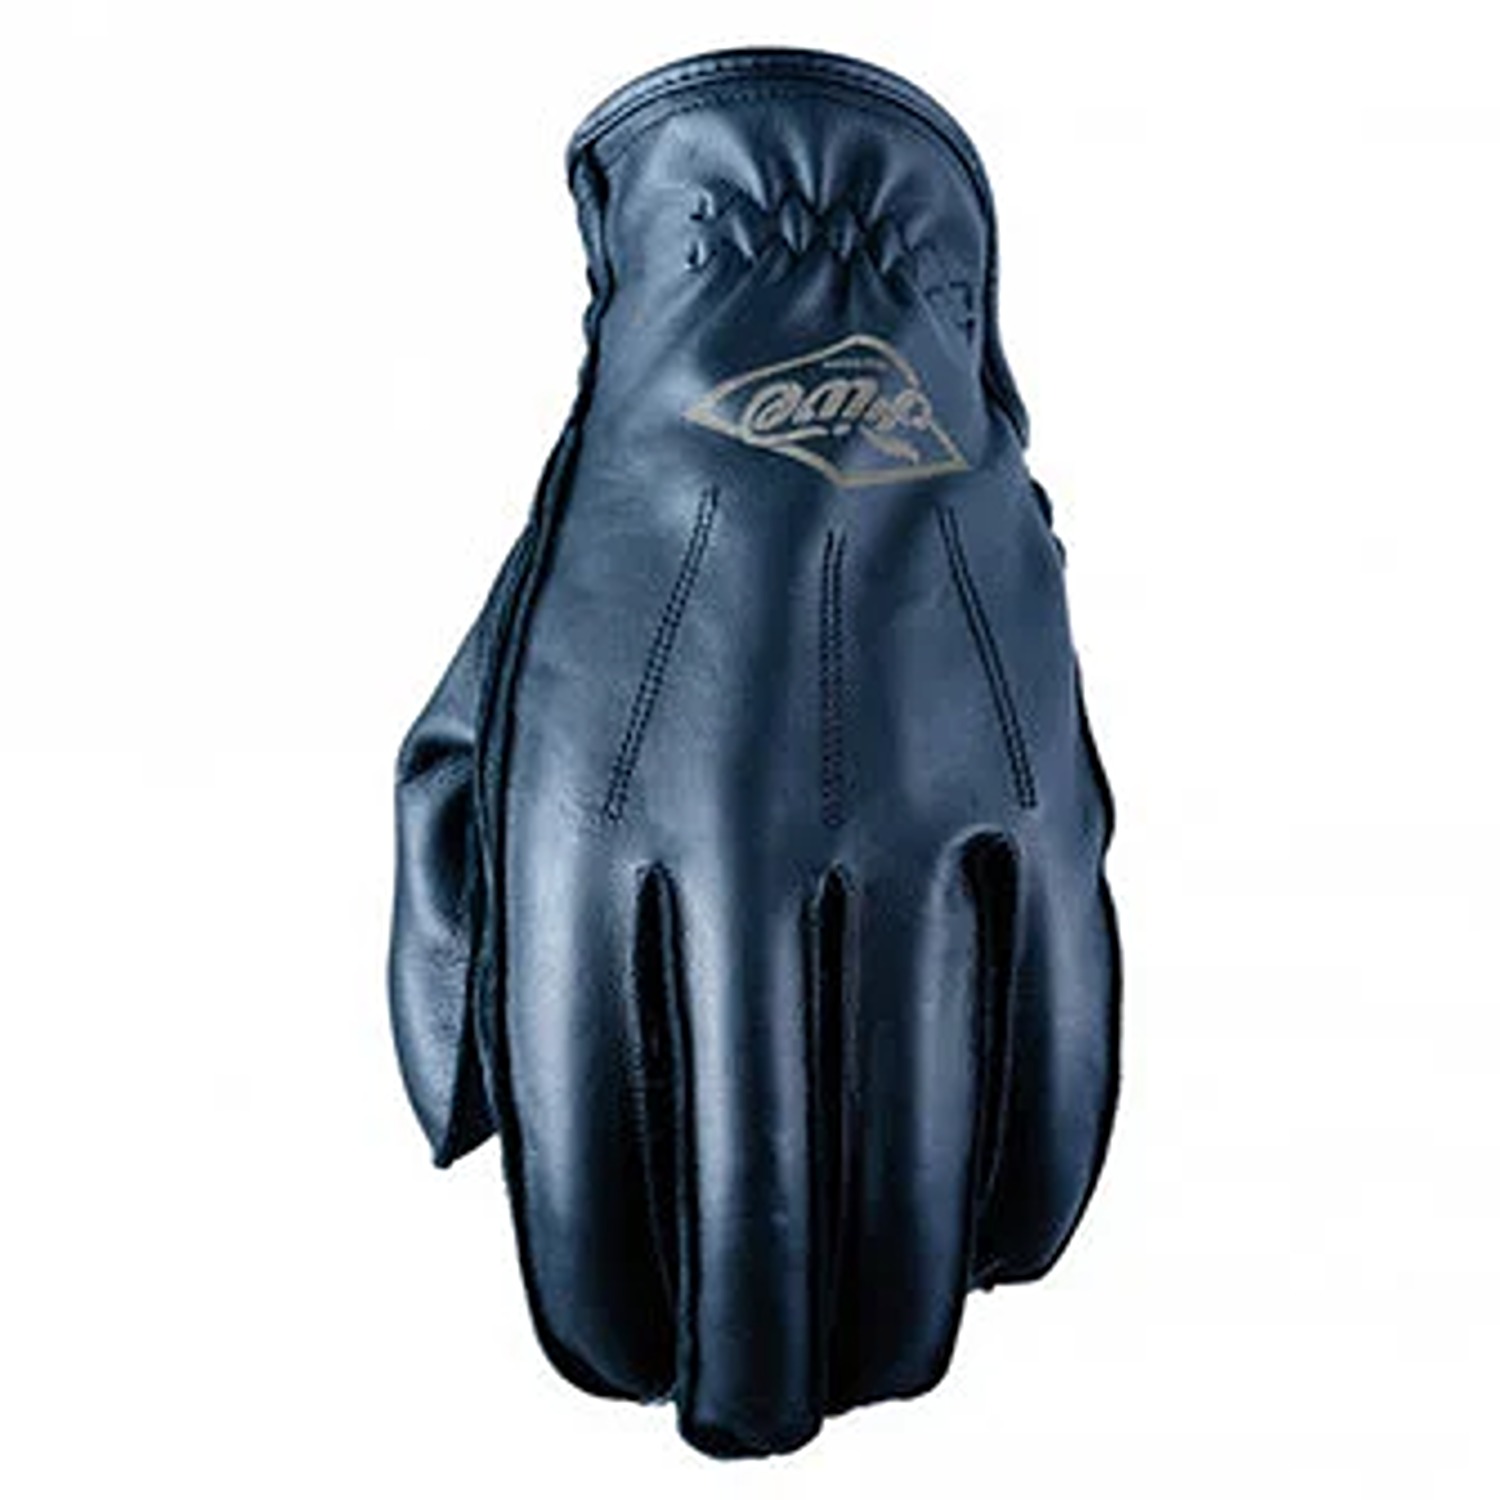 Five Iowa 66 Gloves Black Size L